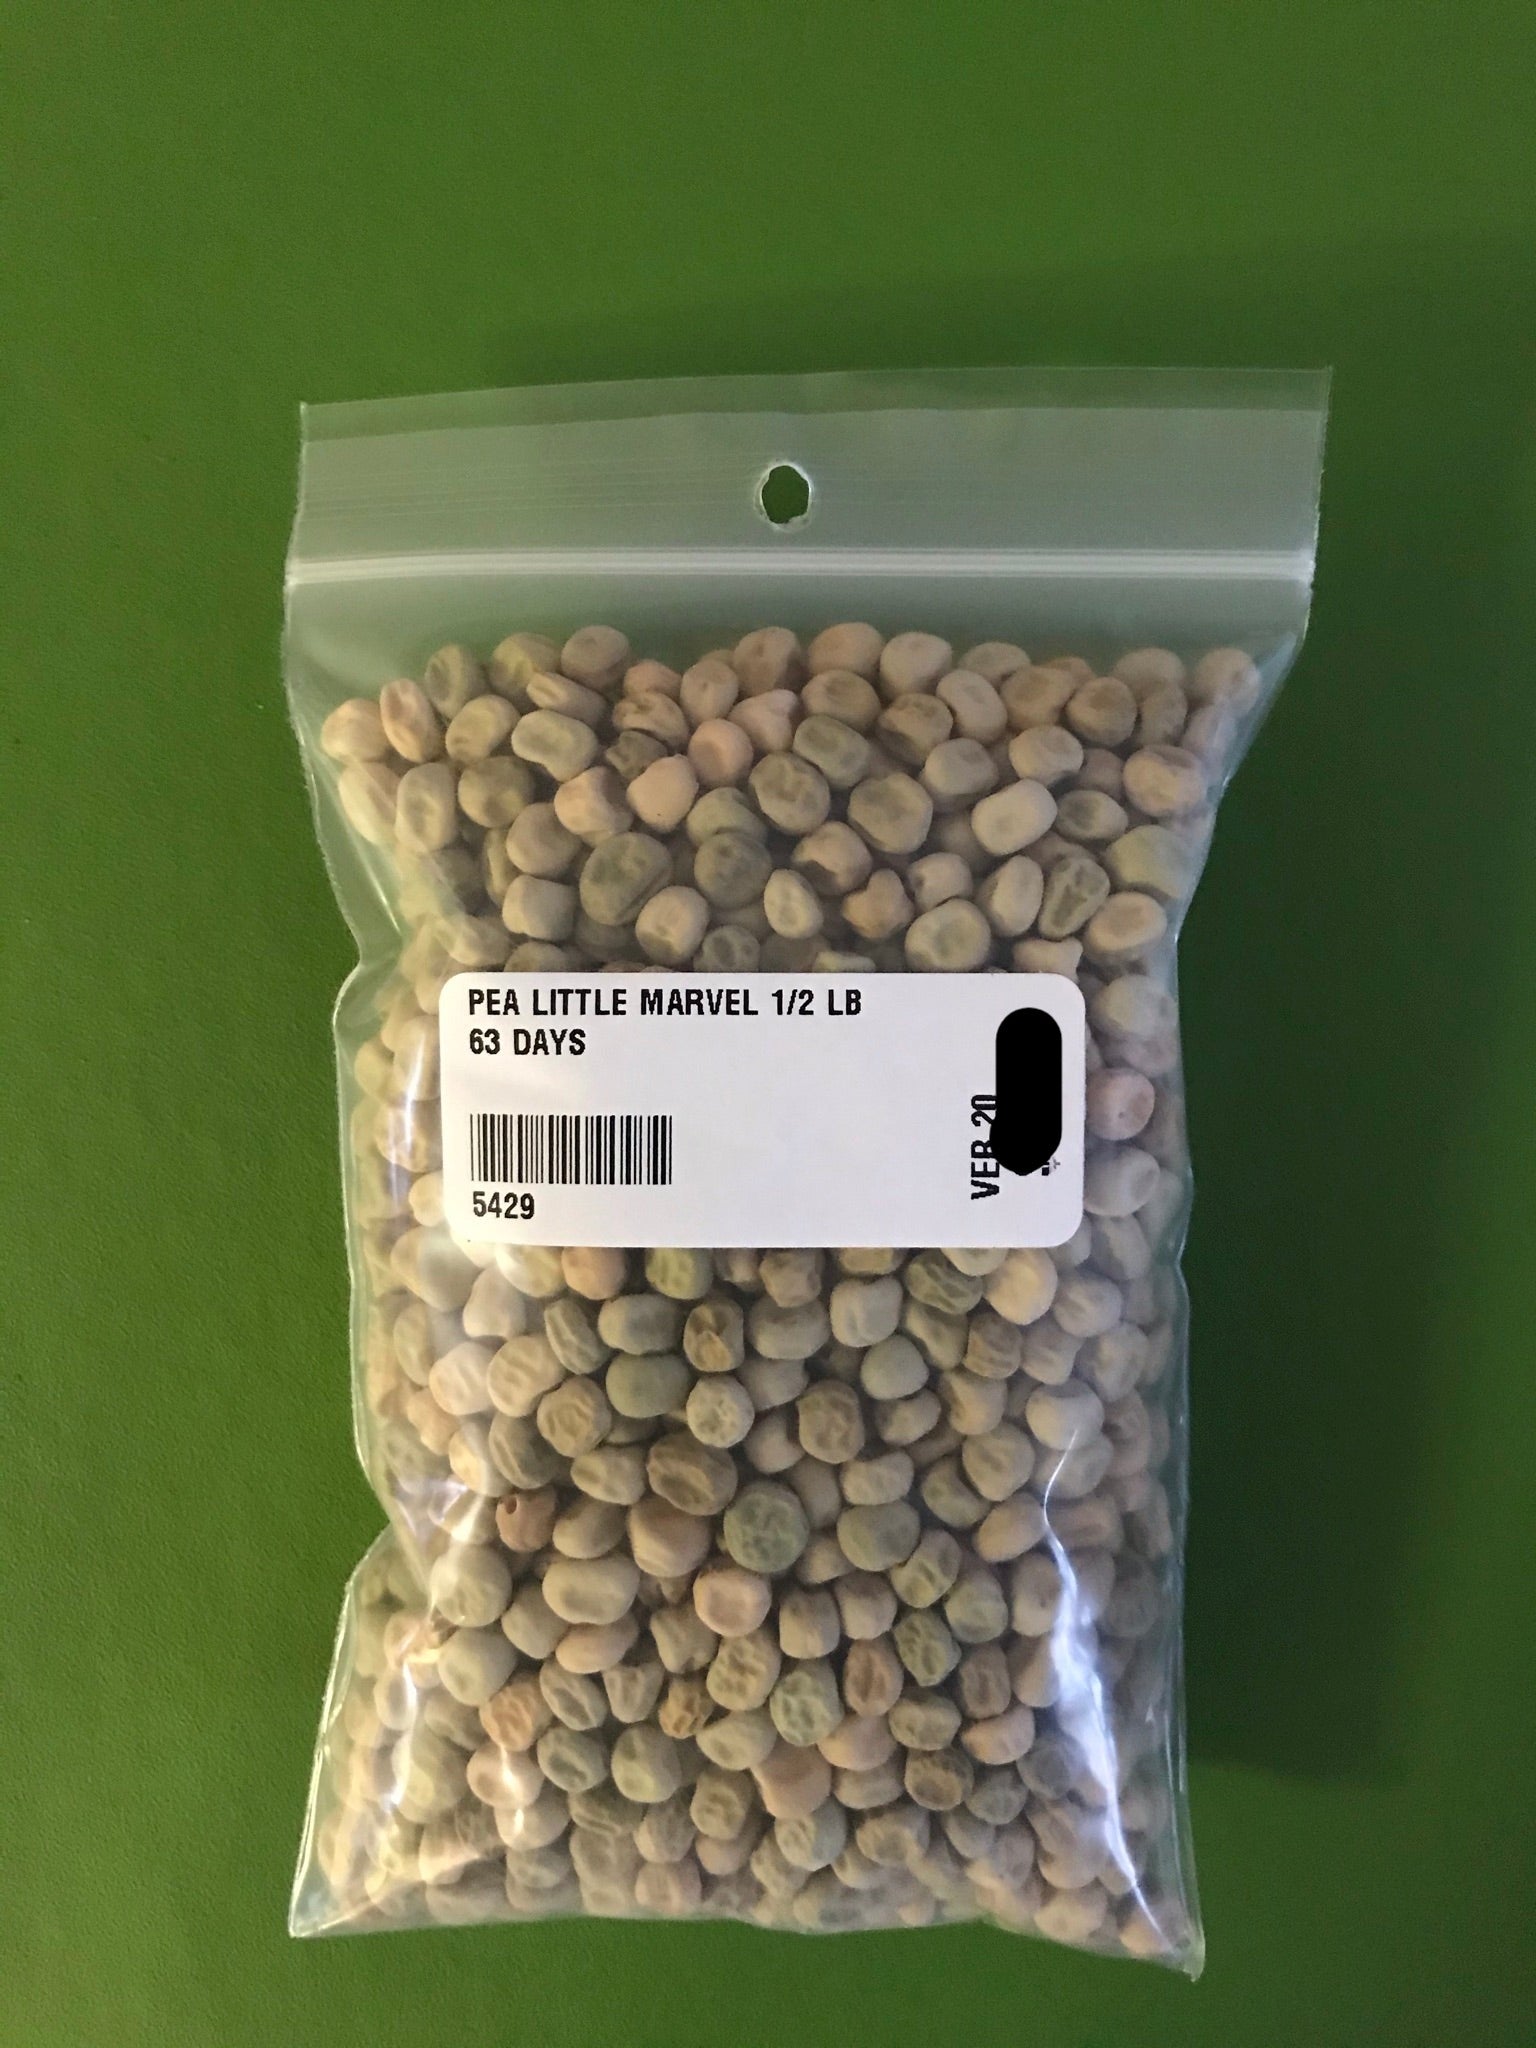 Little Marvel Pea Seeds (English Type) (63 Days) - 1/2 LB - Bulk